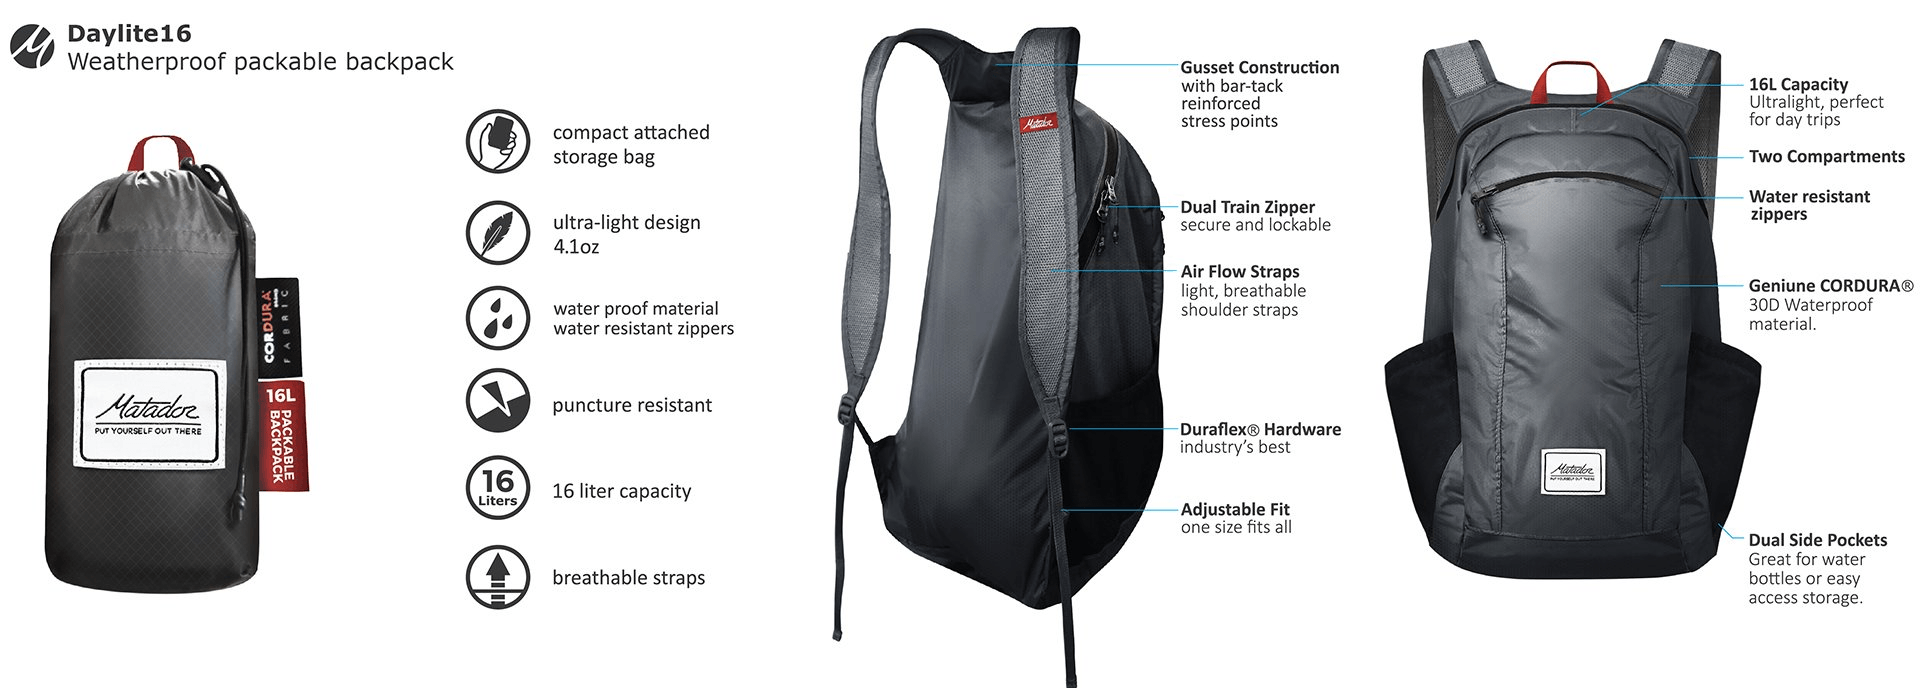 ba-lo-du-lich-matador-dl16-packable-backpack-grey-wetrekvn-6